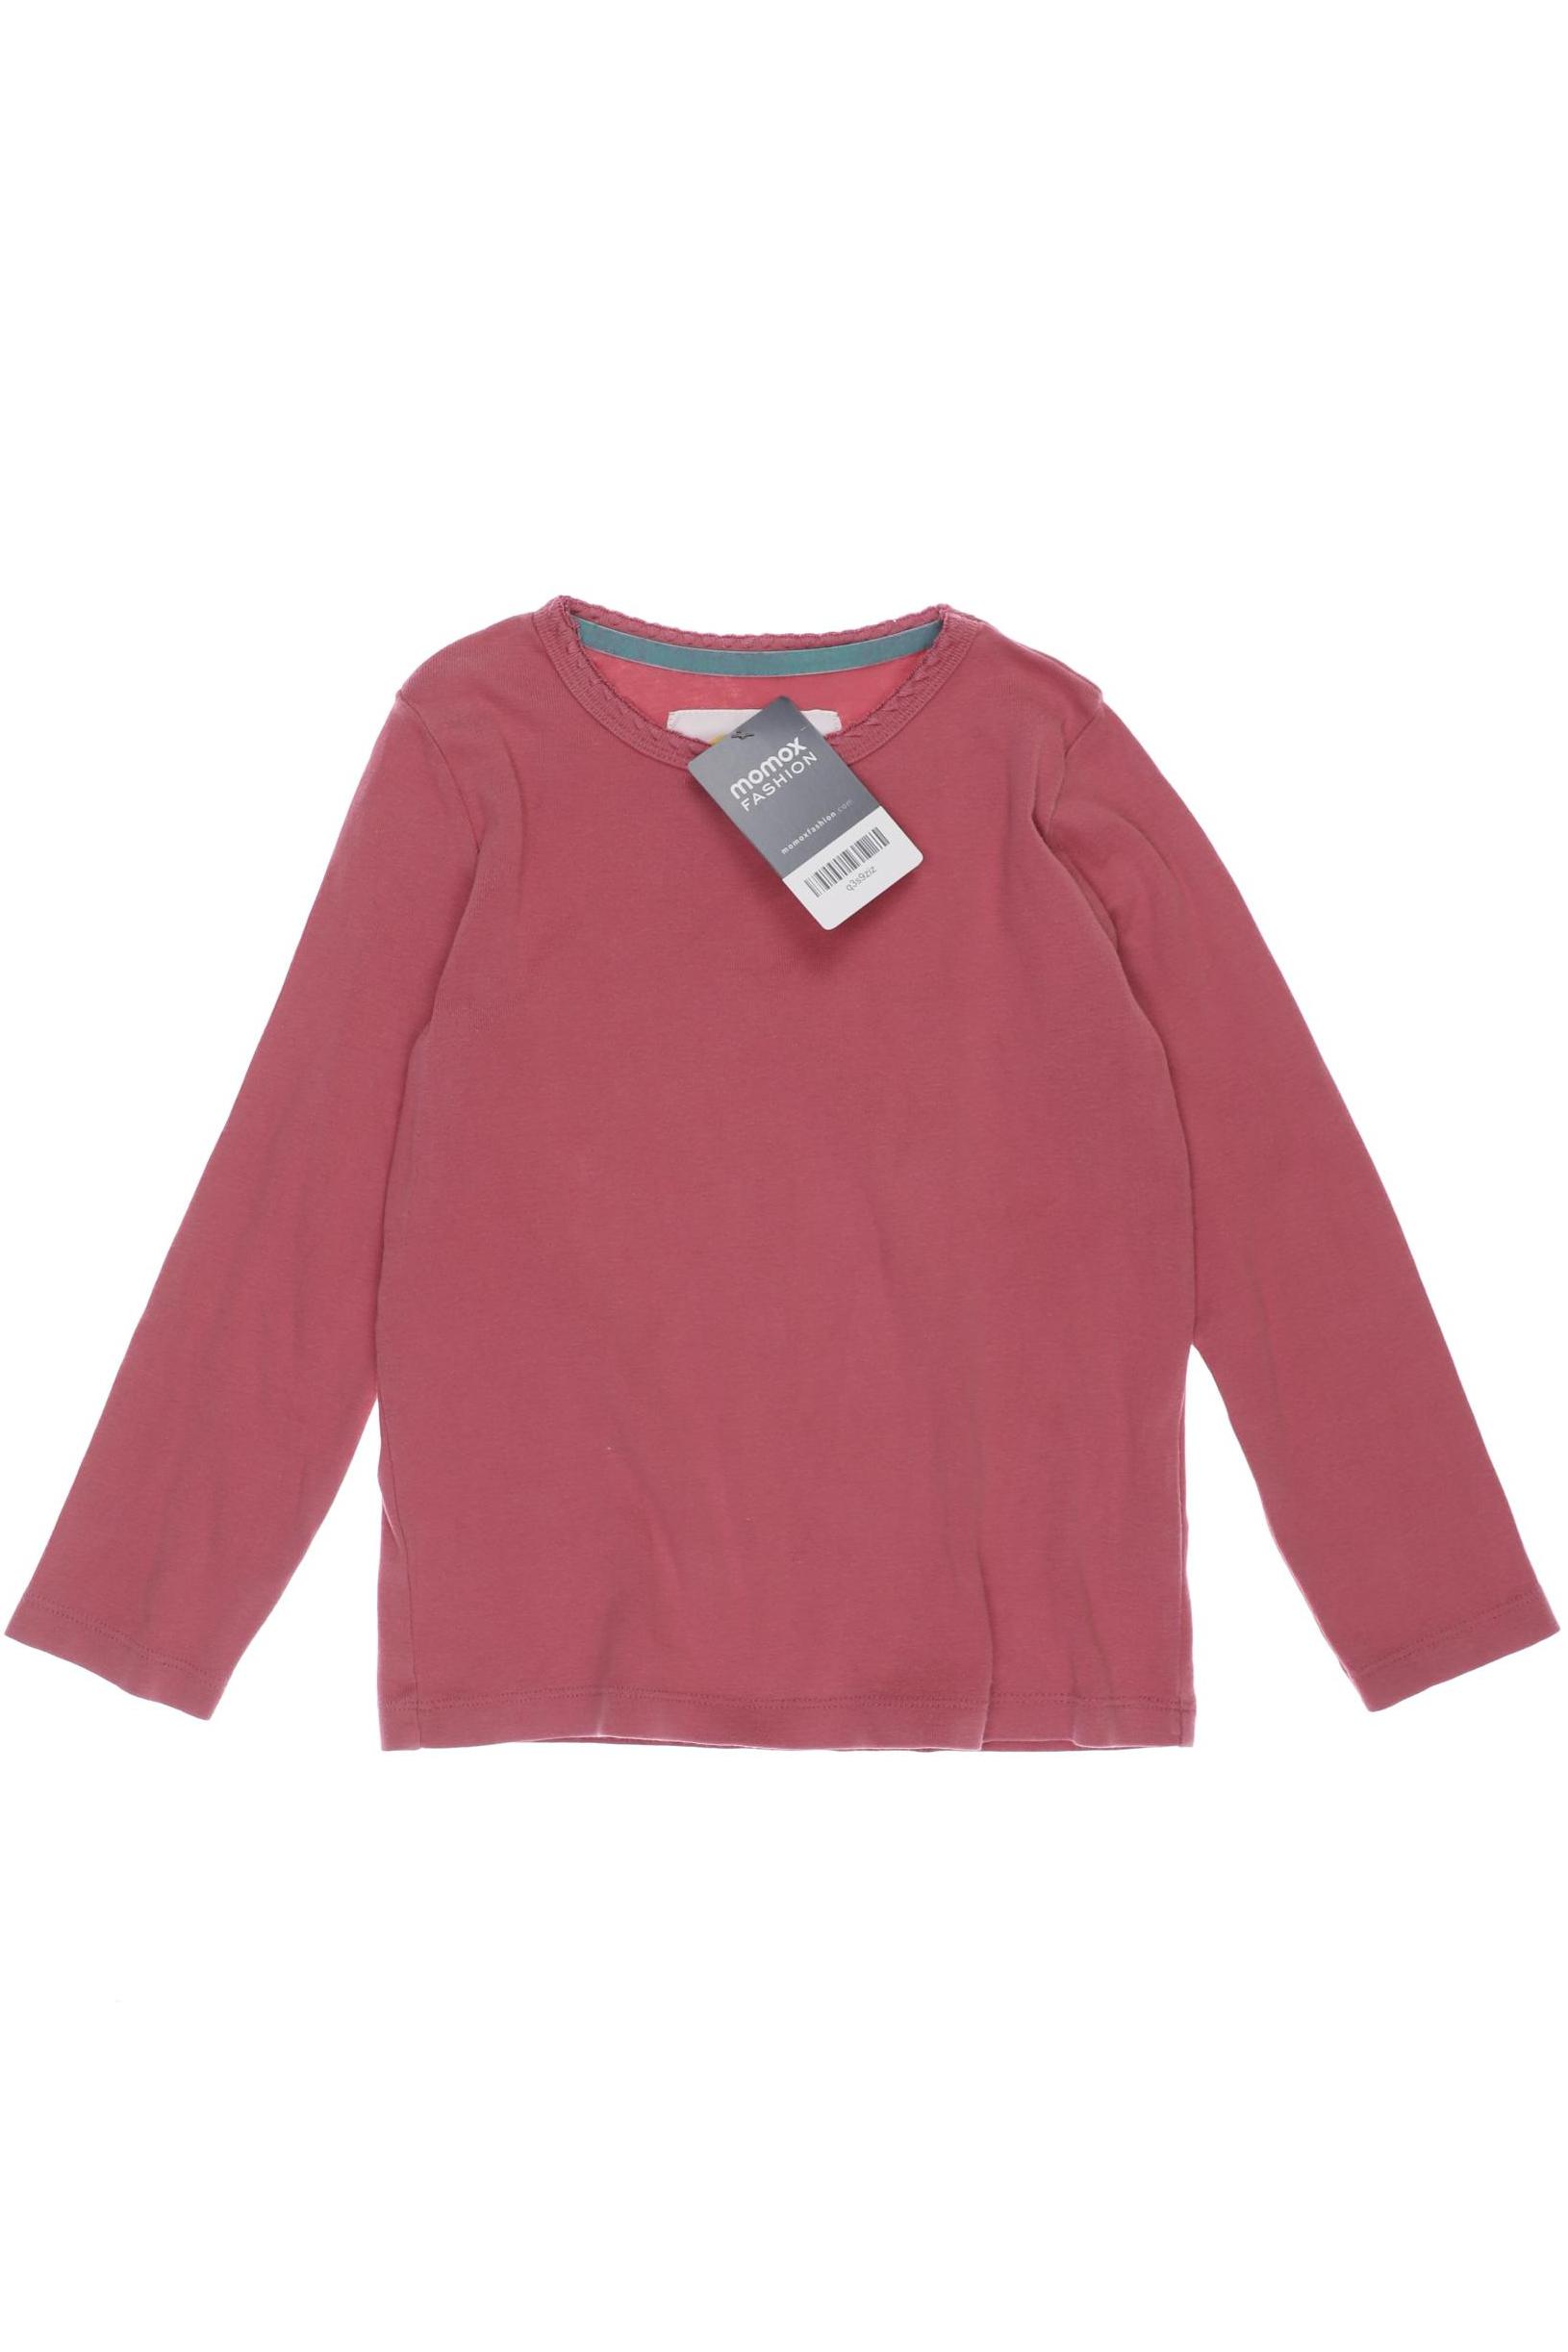 Mini Boden Damen Langarmshirt, pink, Gr. 116 von Mini Boden